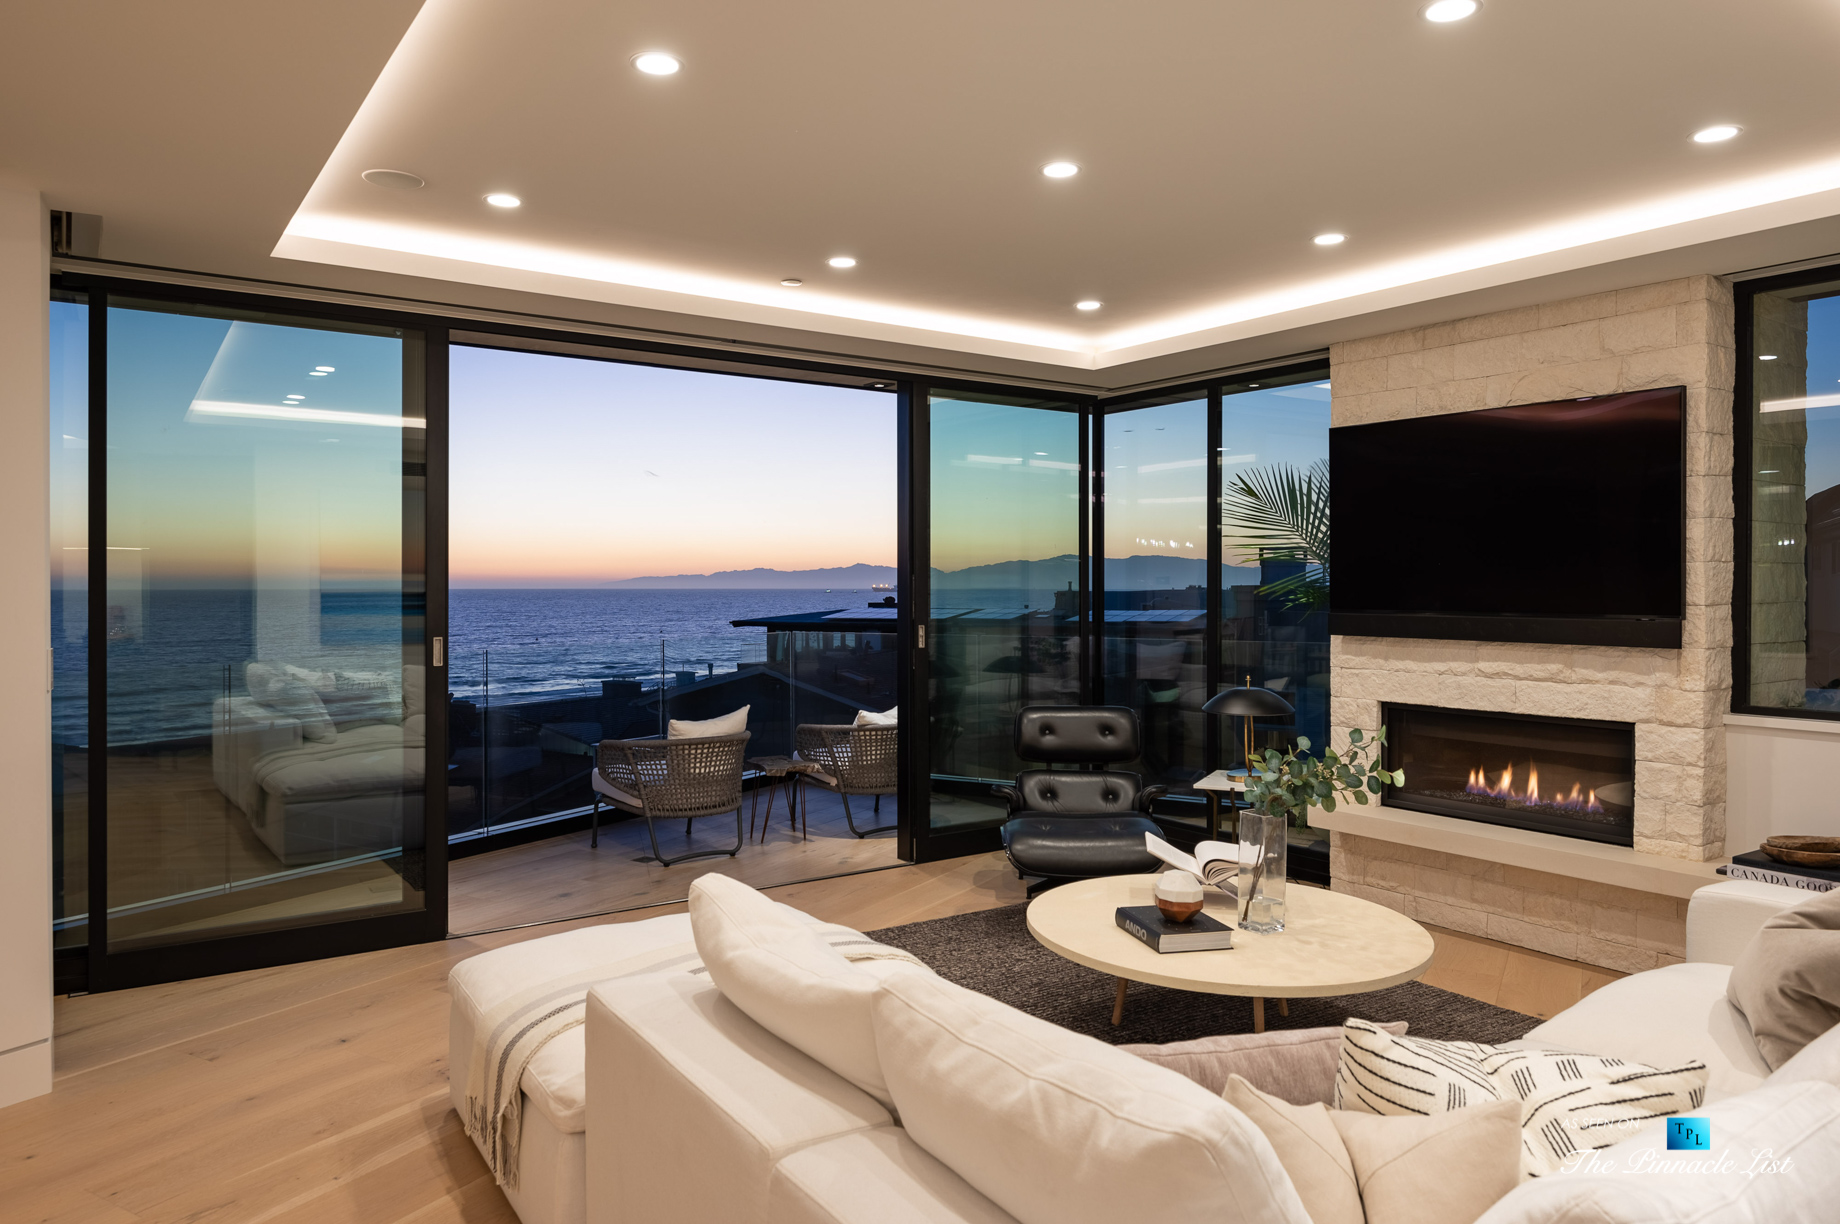 2016 Ocean Dr, Manhattan Beach, CA, USA – Master Bedroom Sunset – Luxury Real Estate – Modern Ocean View Home